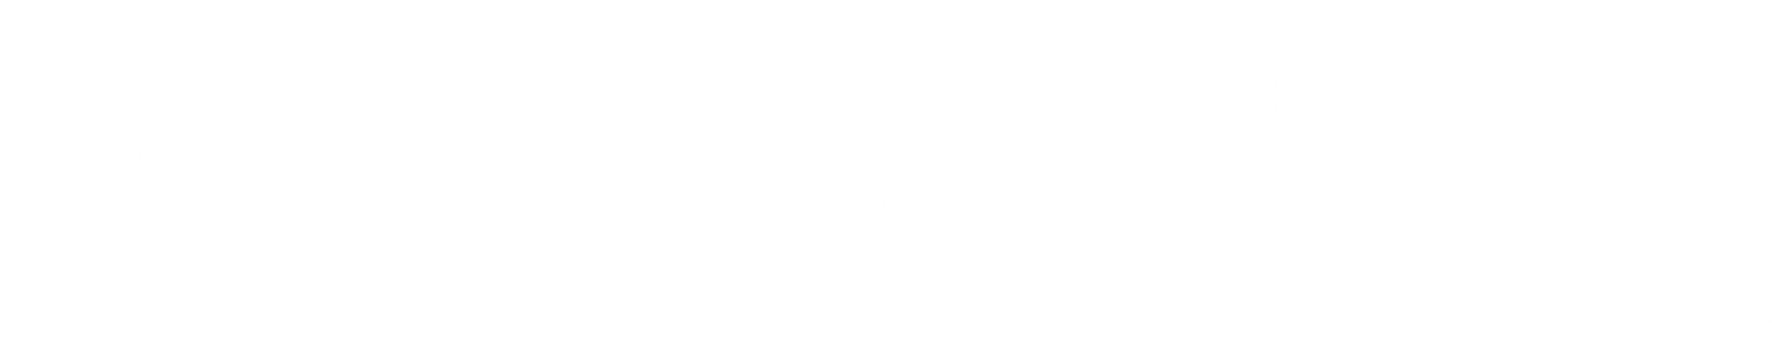 Gintaro fotografija